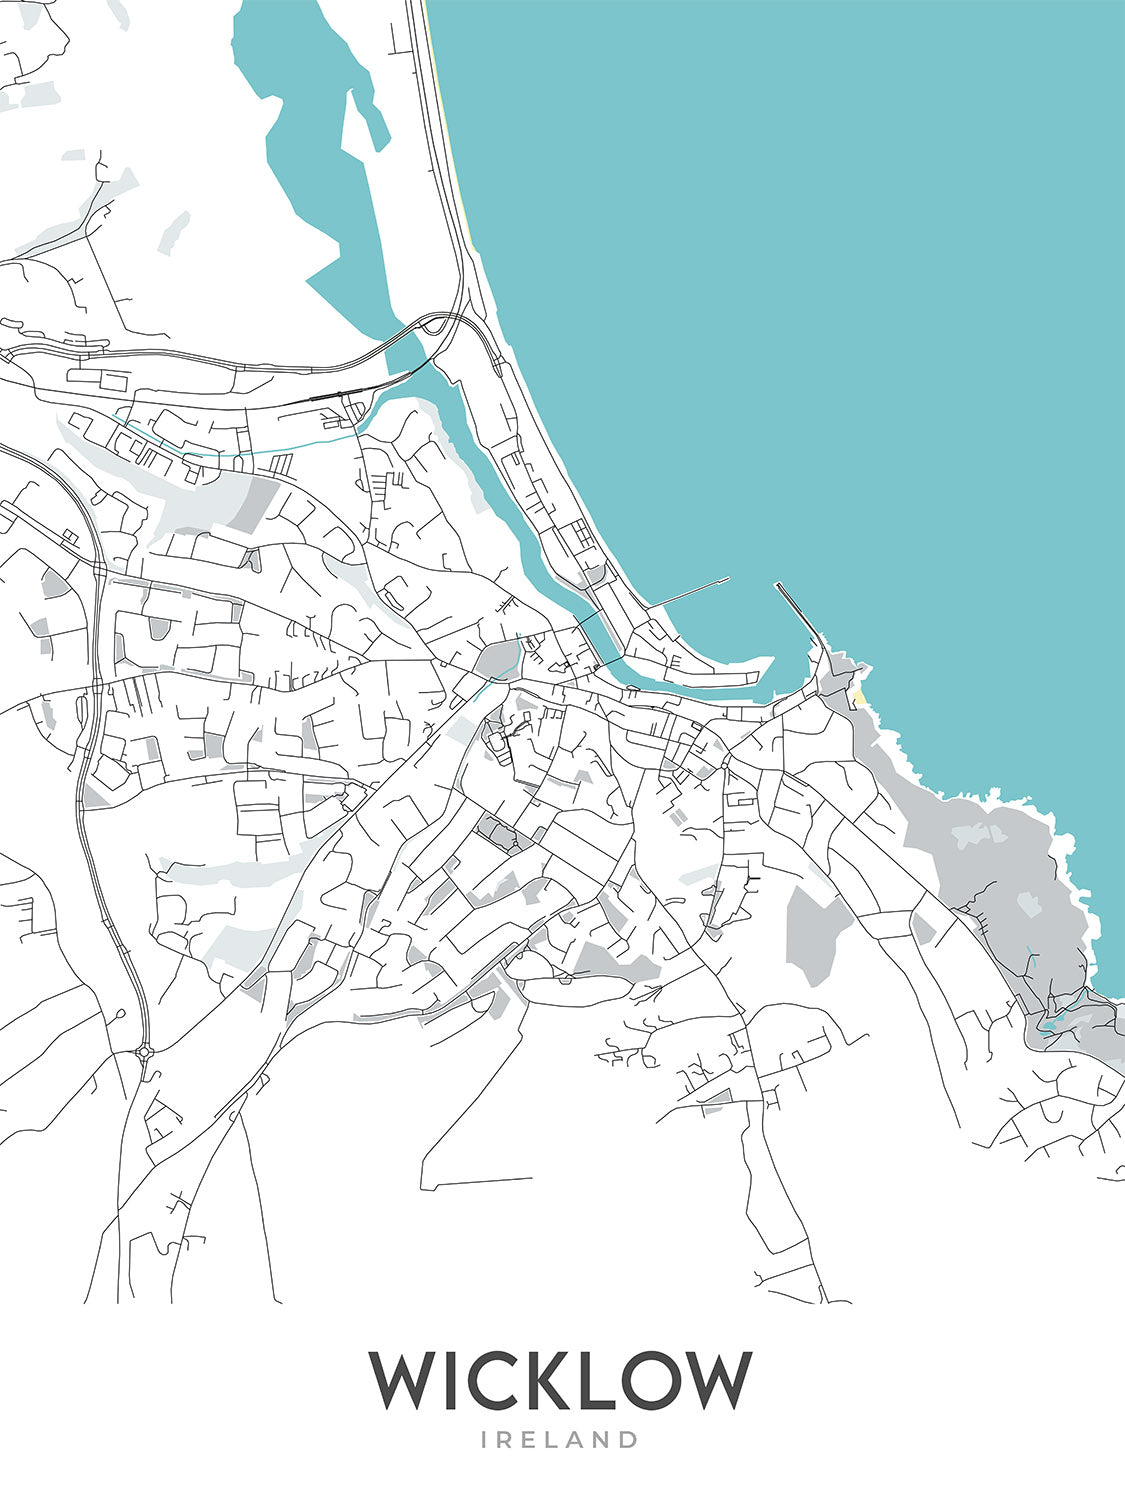 Modern Town Map of Wicklow, Ireland: Wicklow Mountains, Glendalough Valley, Lough Tay, Lough Dan, Vartry Reservoir